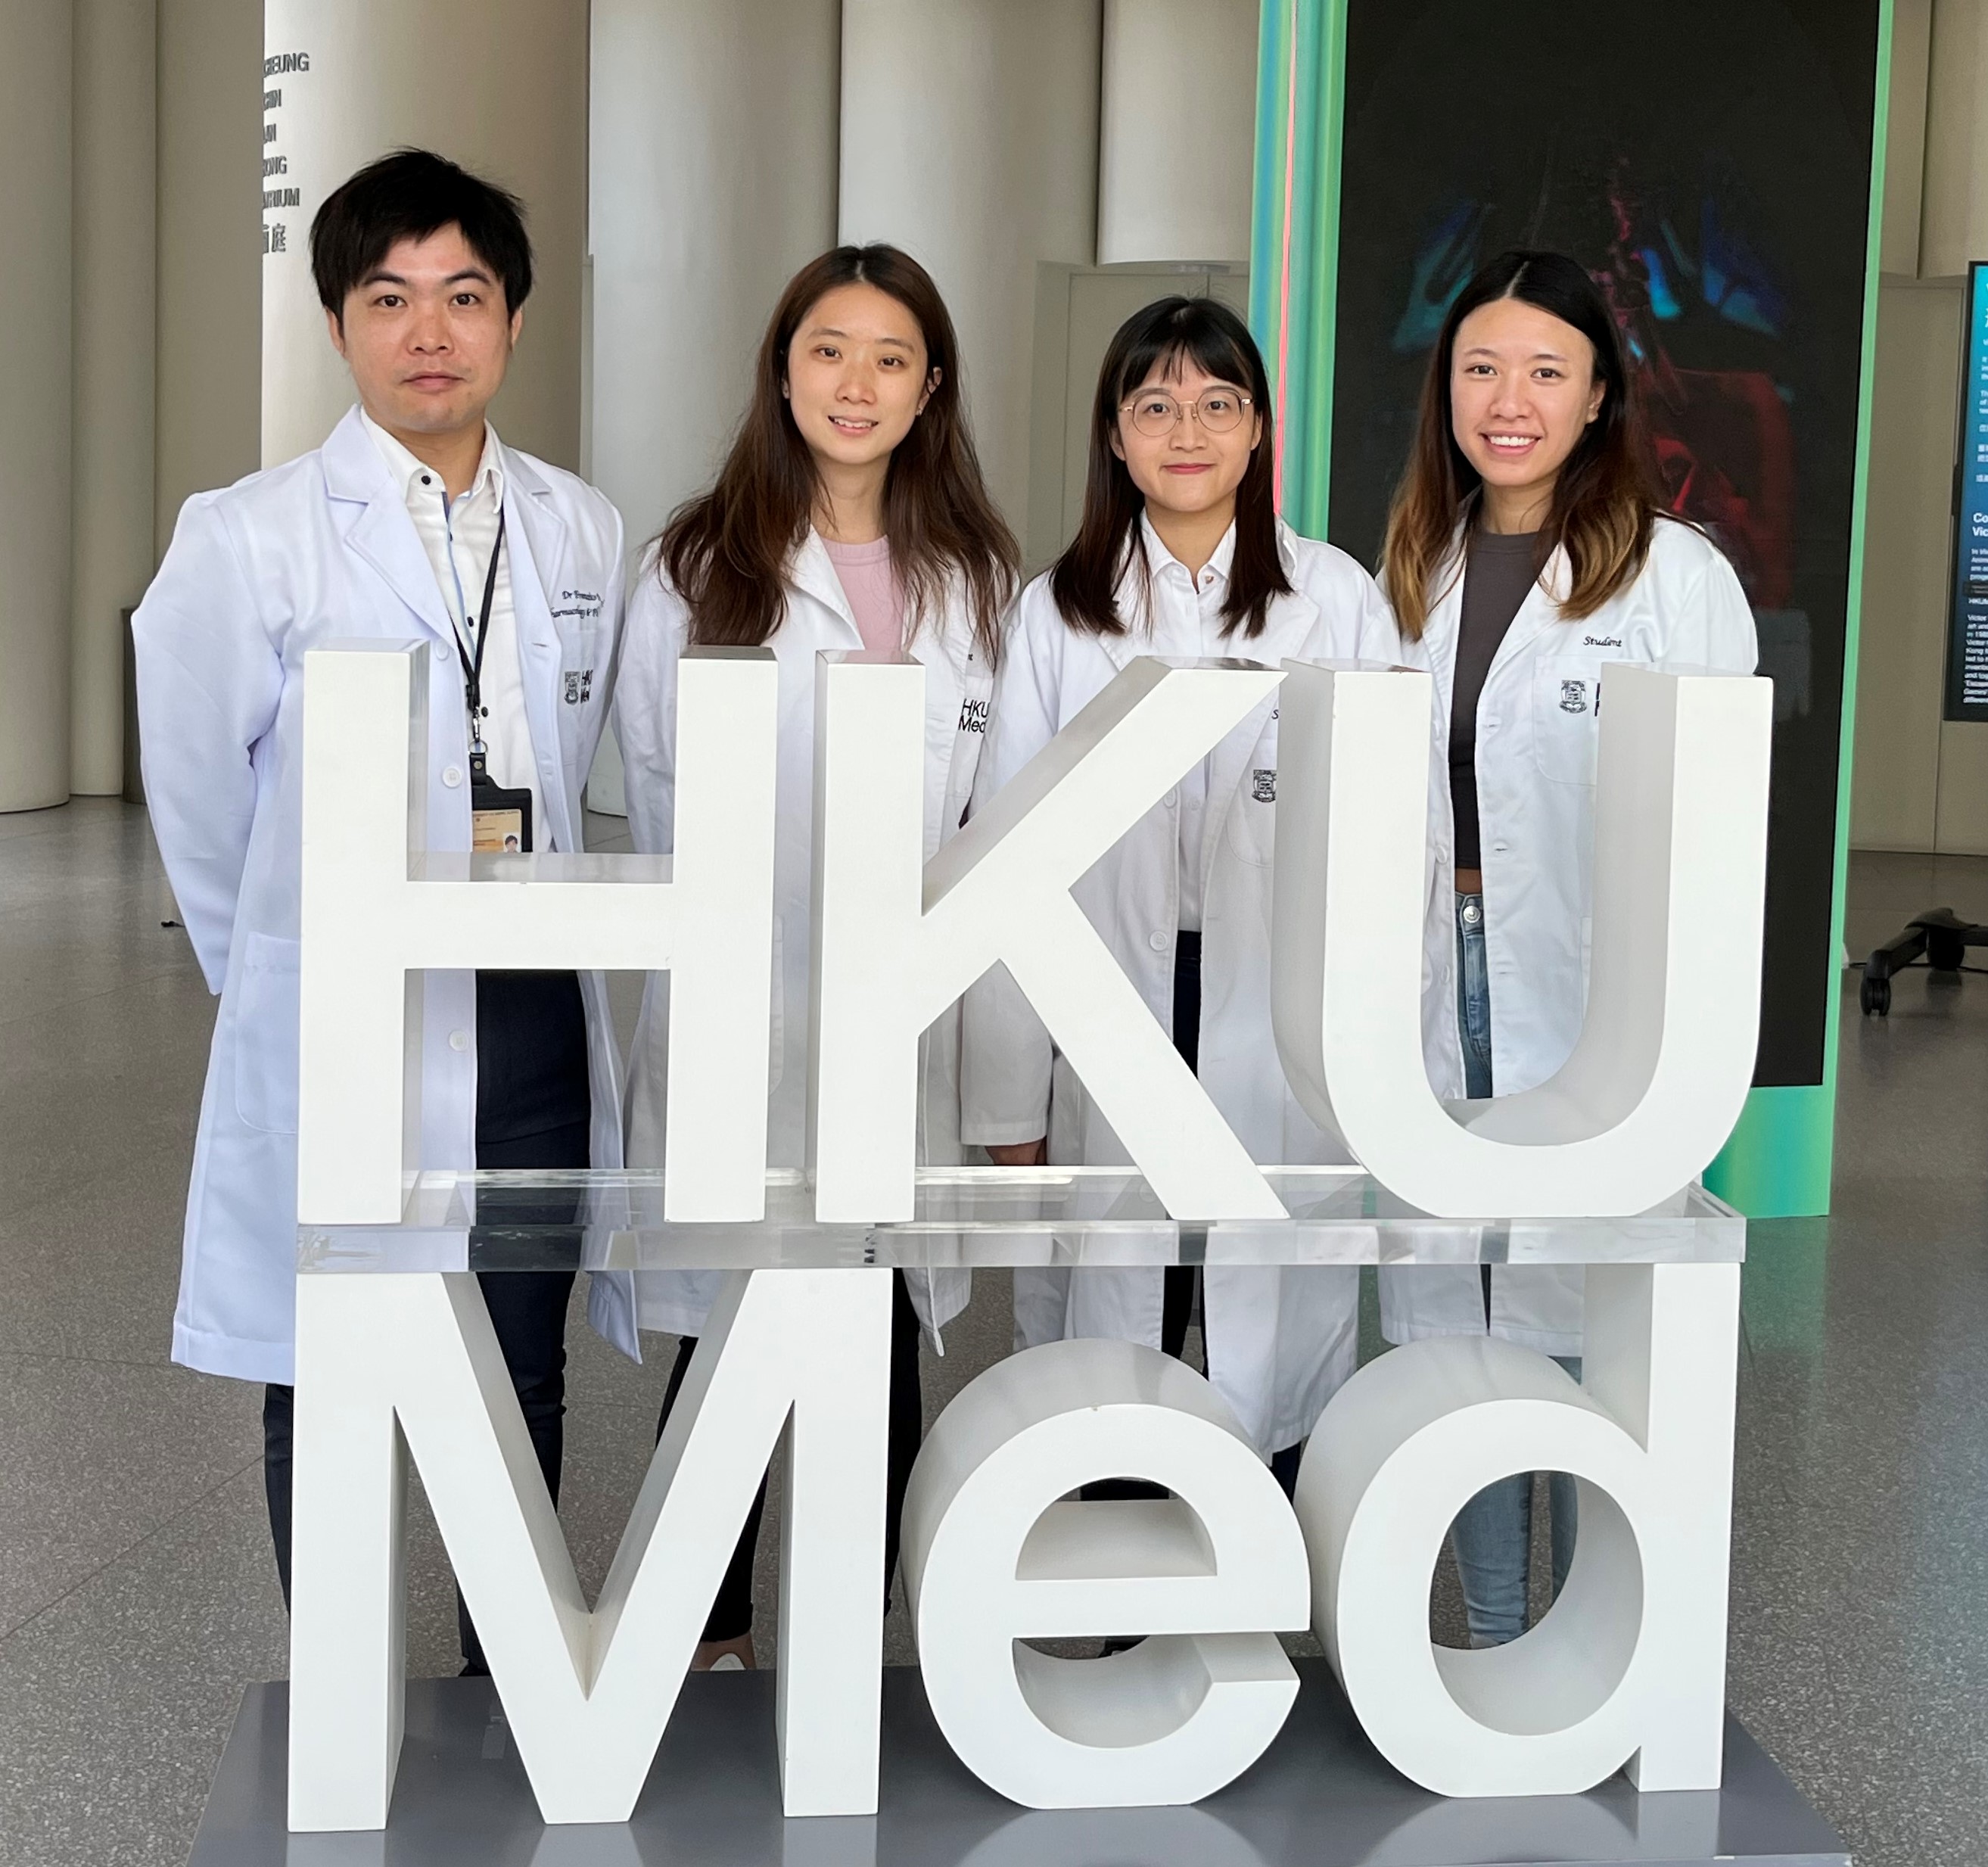 Research team members: Dr Francisco Lai Tsz-tsun, Janice Leung, Dora Ng, and Rachel Chu.